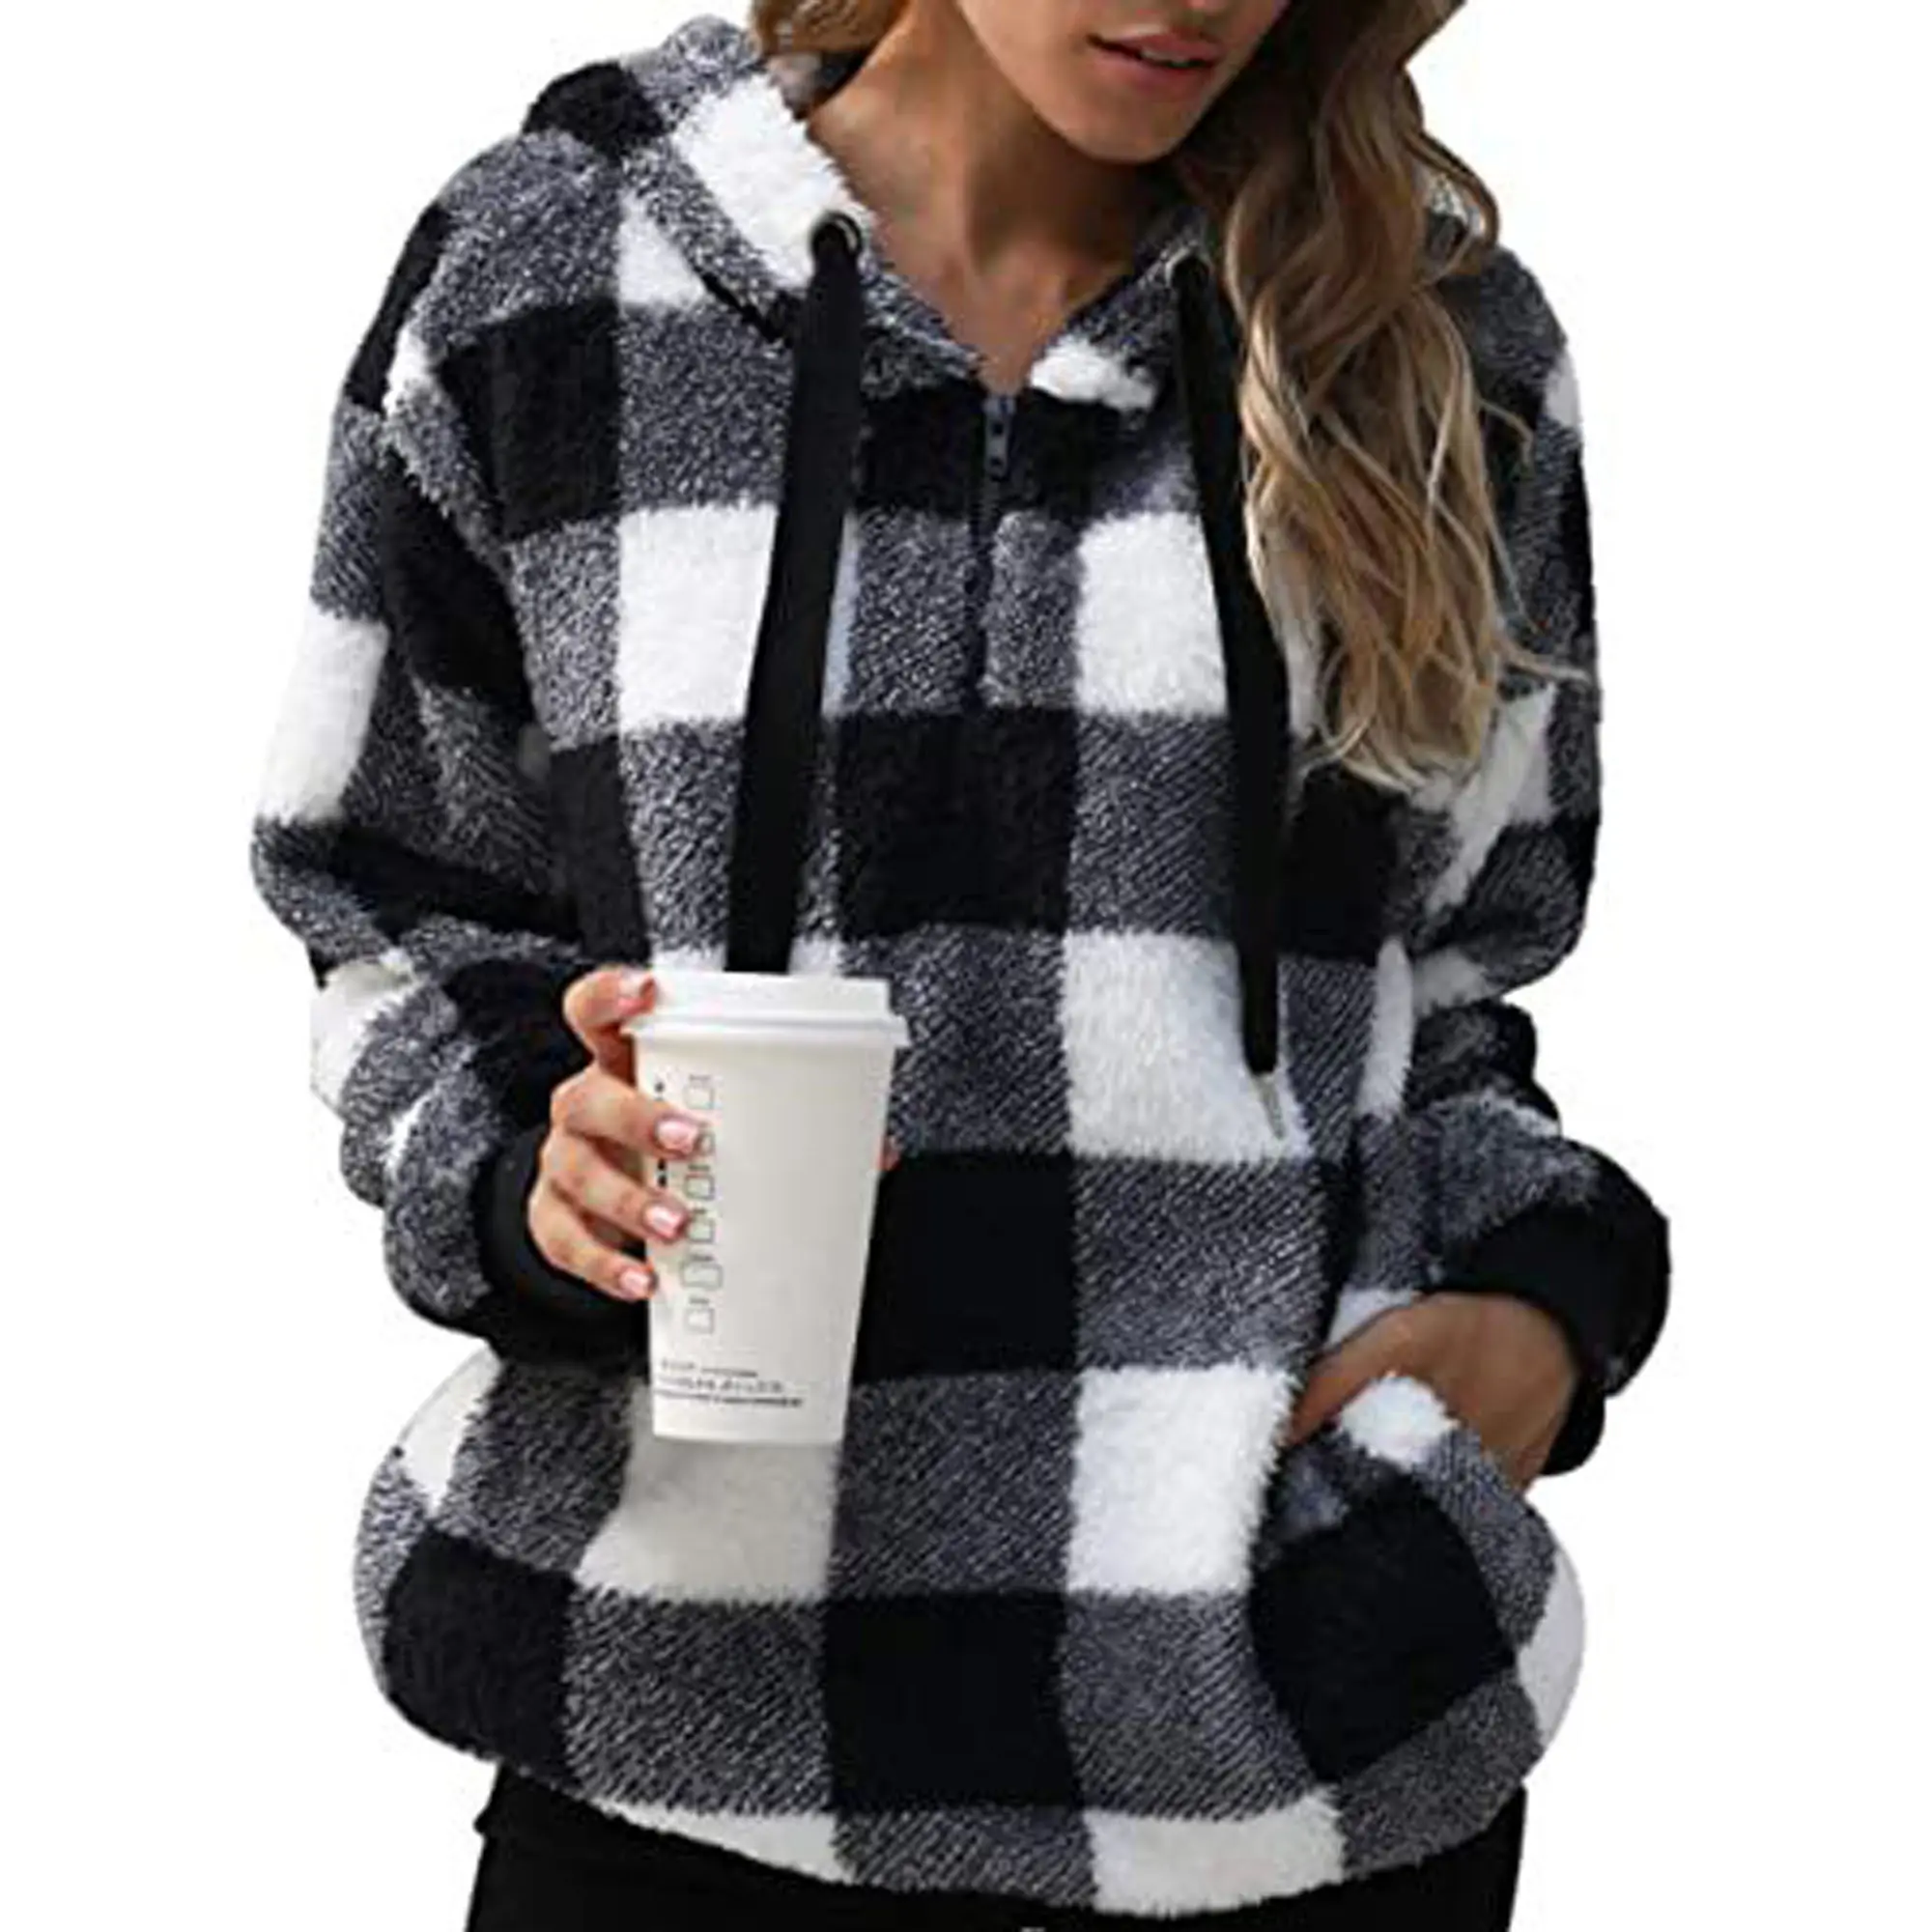 Hot Sale Women's Casual Fleece Sweatshirt Anti-Shrink Plain Blank Pullover T-Shirt Hoodies for Summer and Autumn